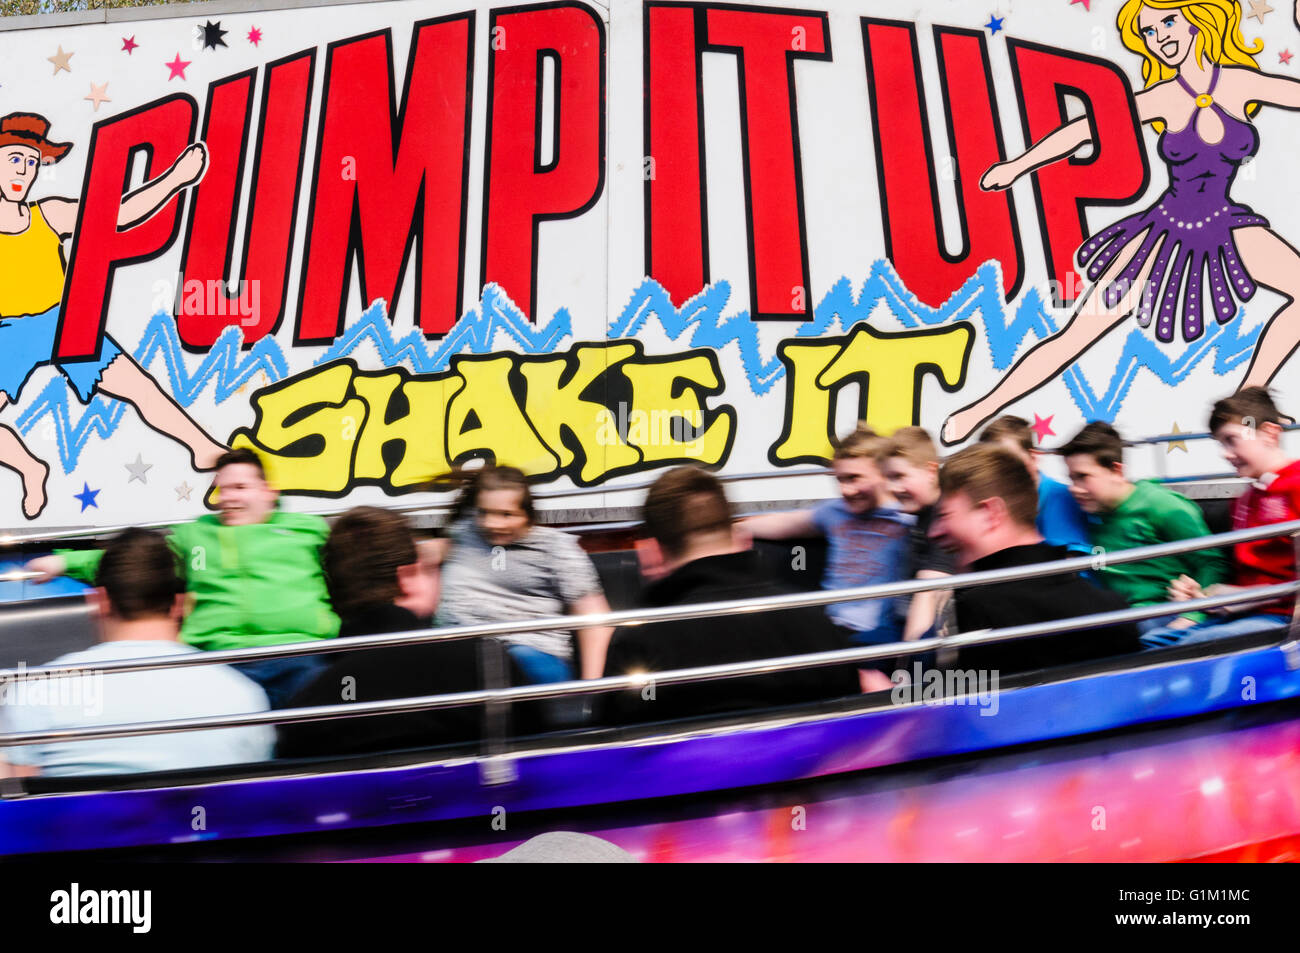 'Pump It Up' centrifugal shaker fairground ride Stock Photo